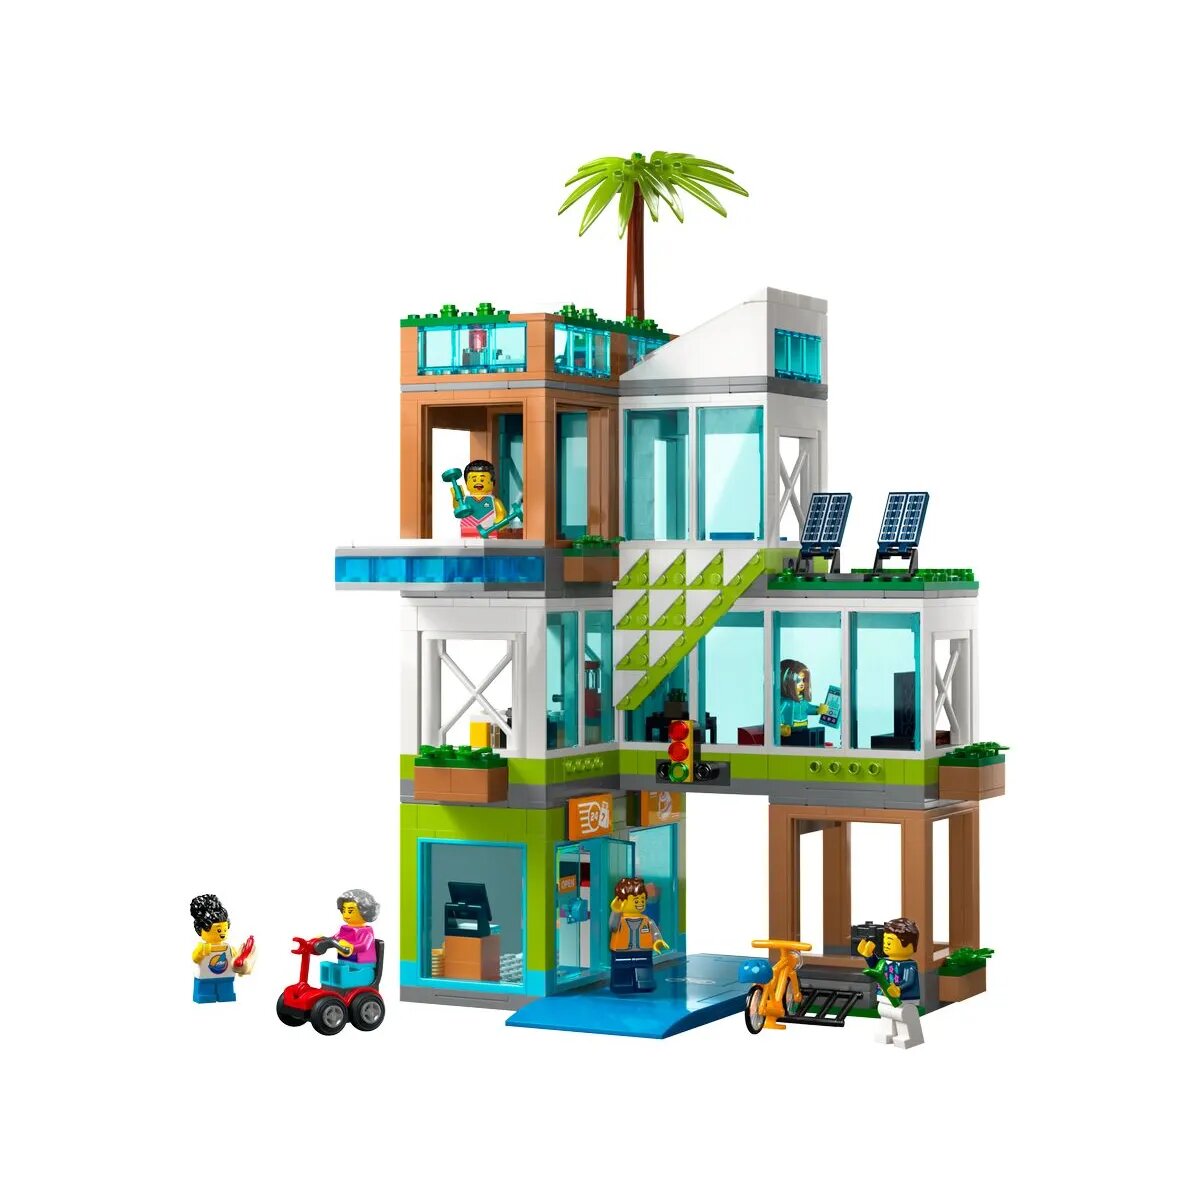 LEGO® City Community 60365 Appartementhaus